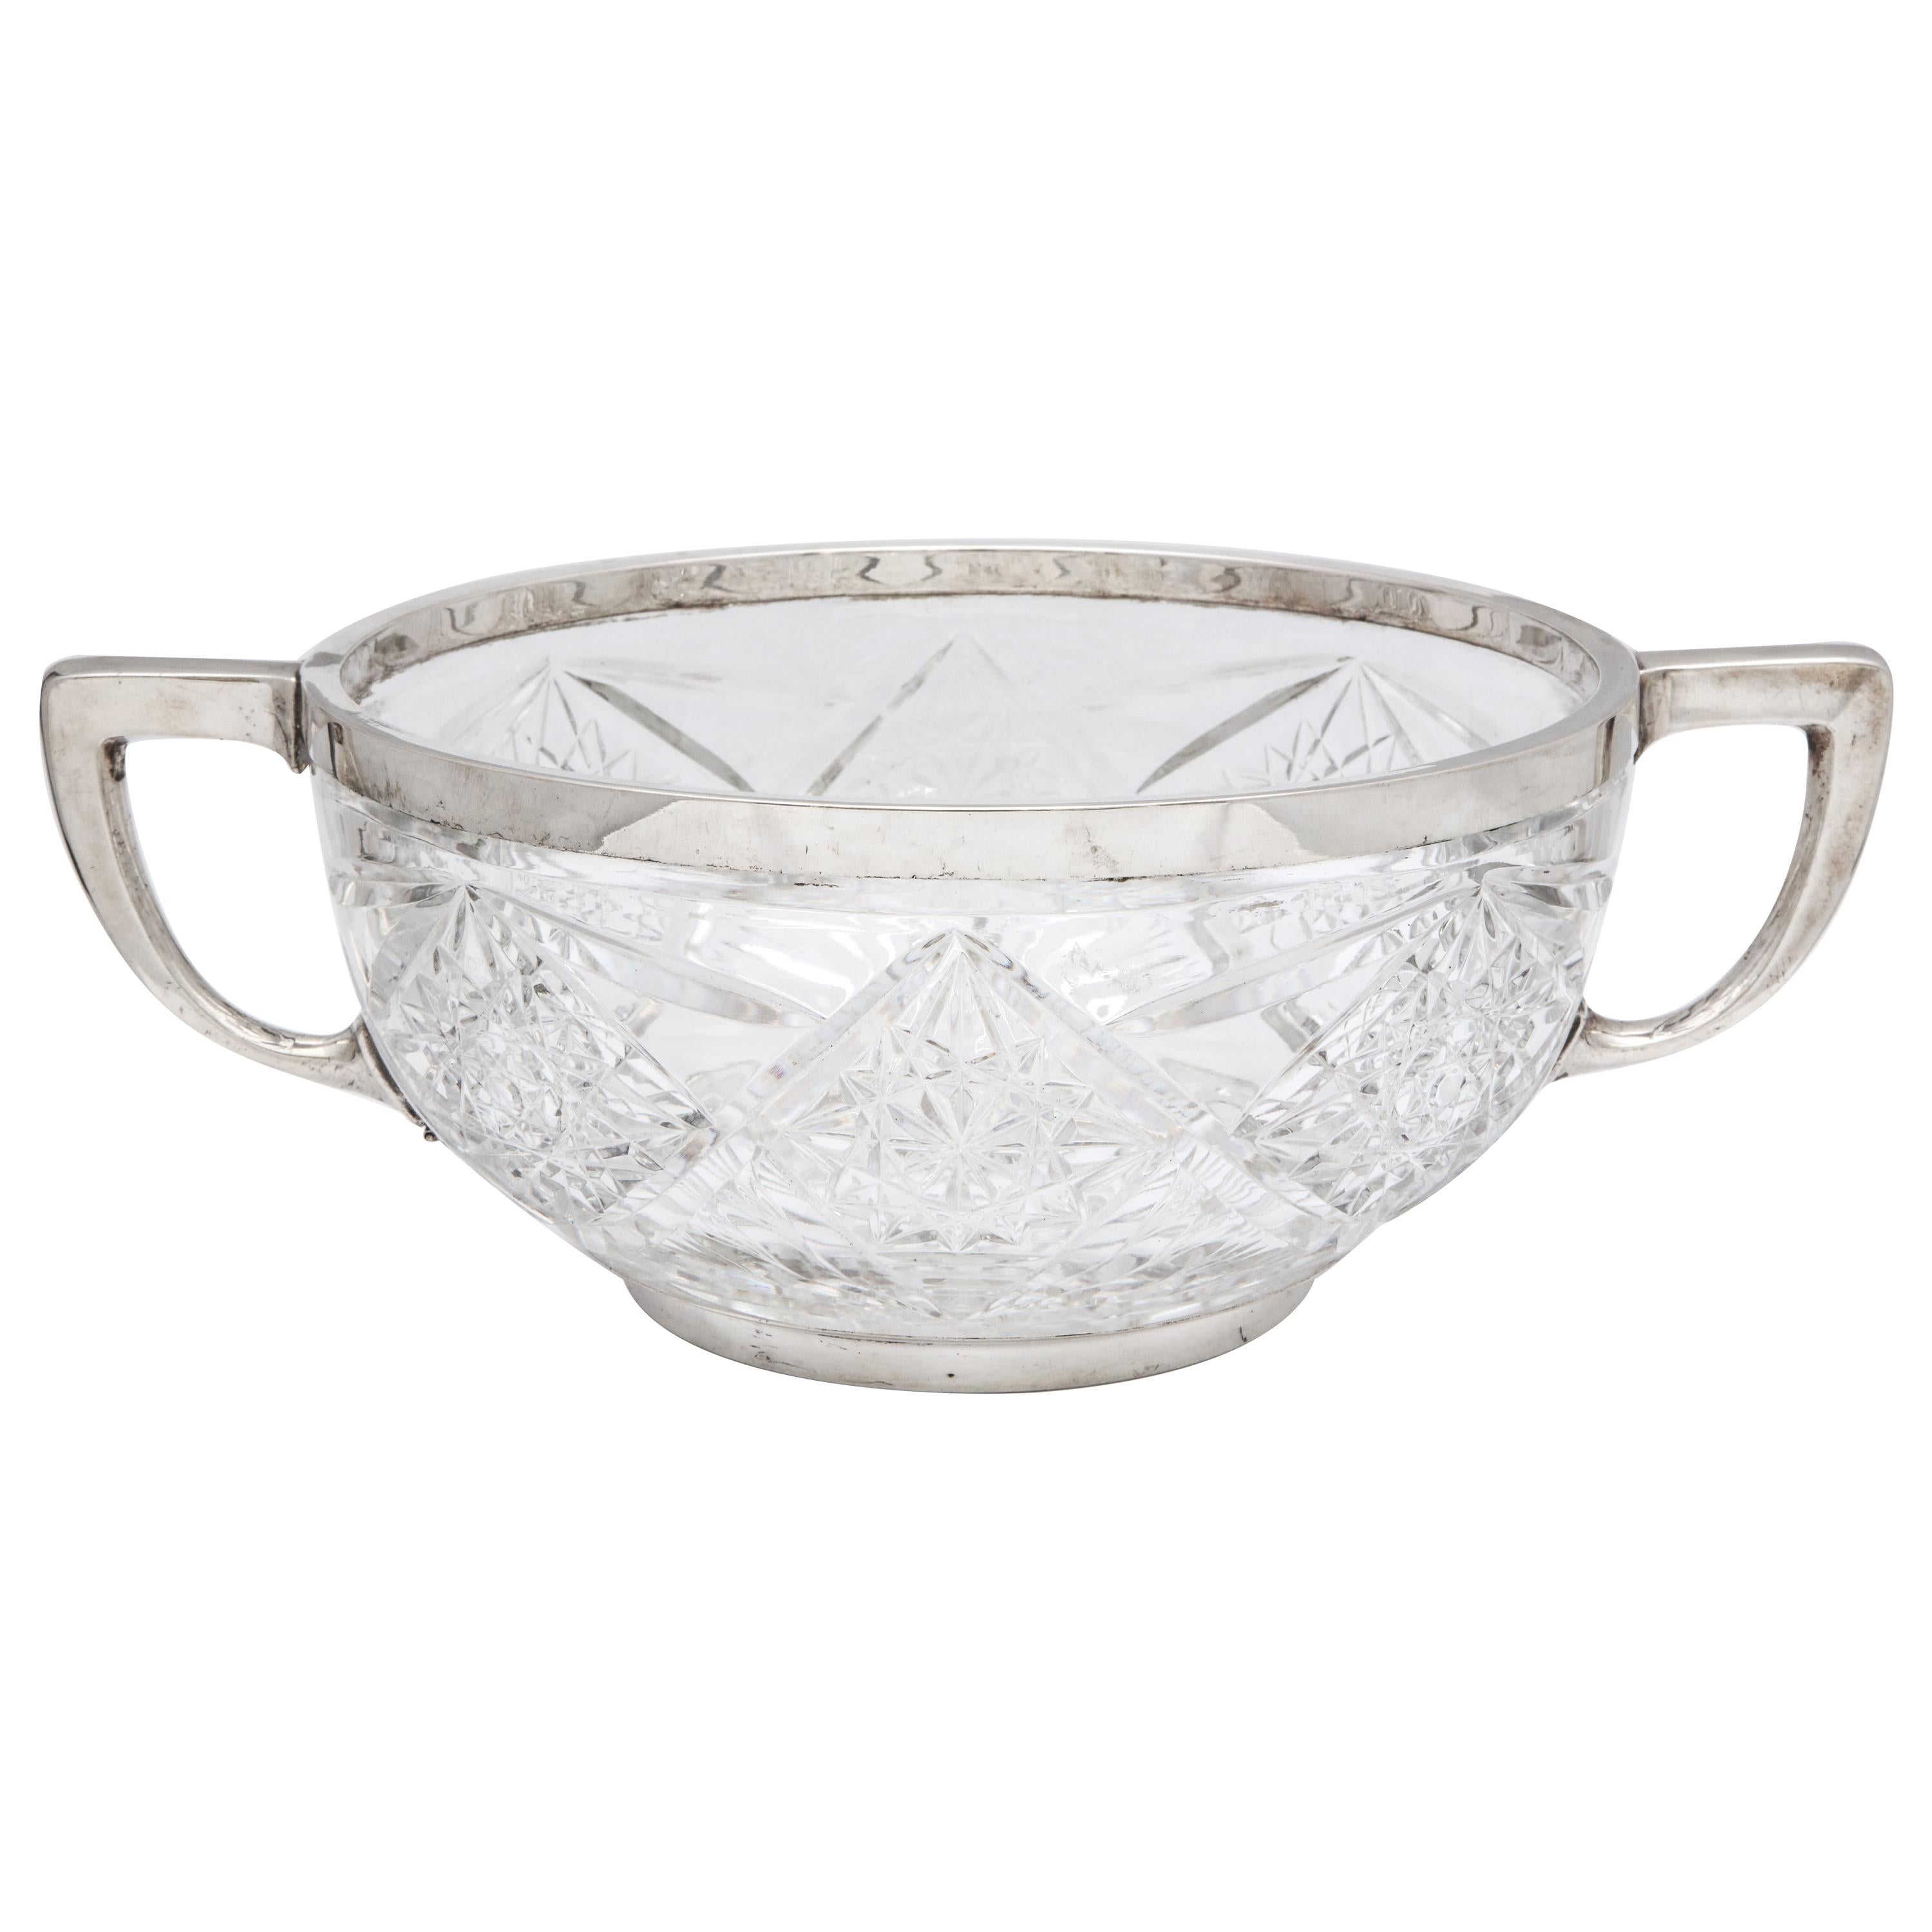 Edwardian Continental Silver (.800) - Mounted Cut Crystal Centerpiece Bowl